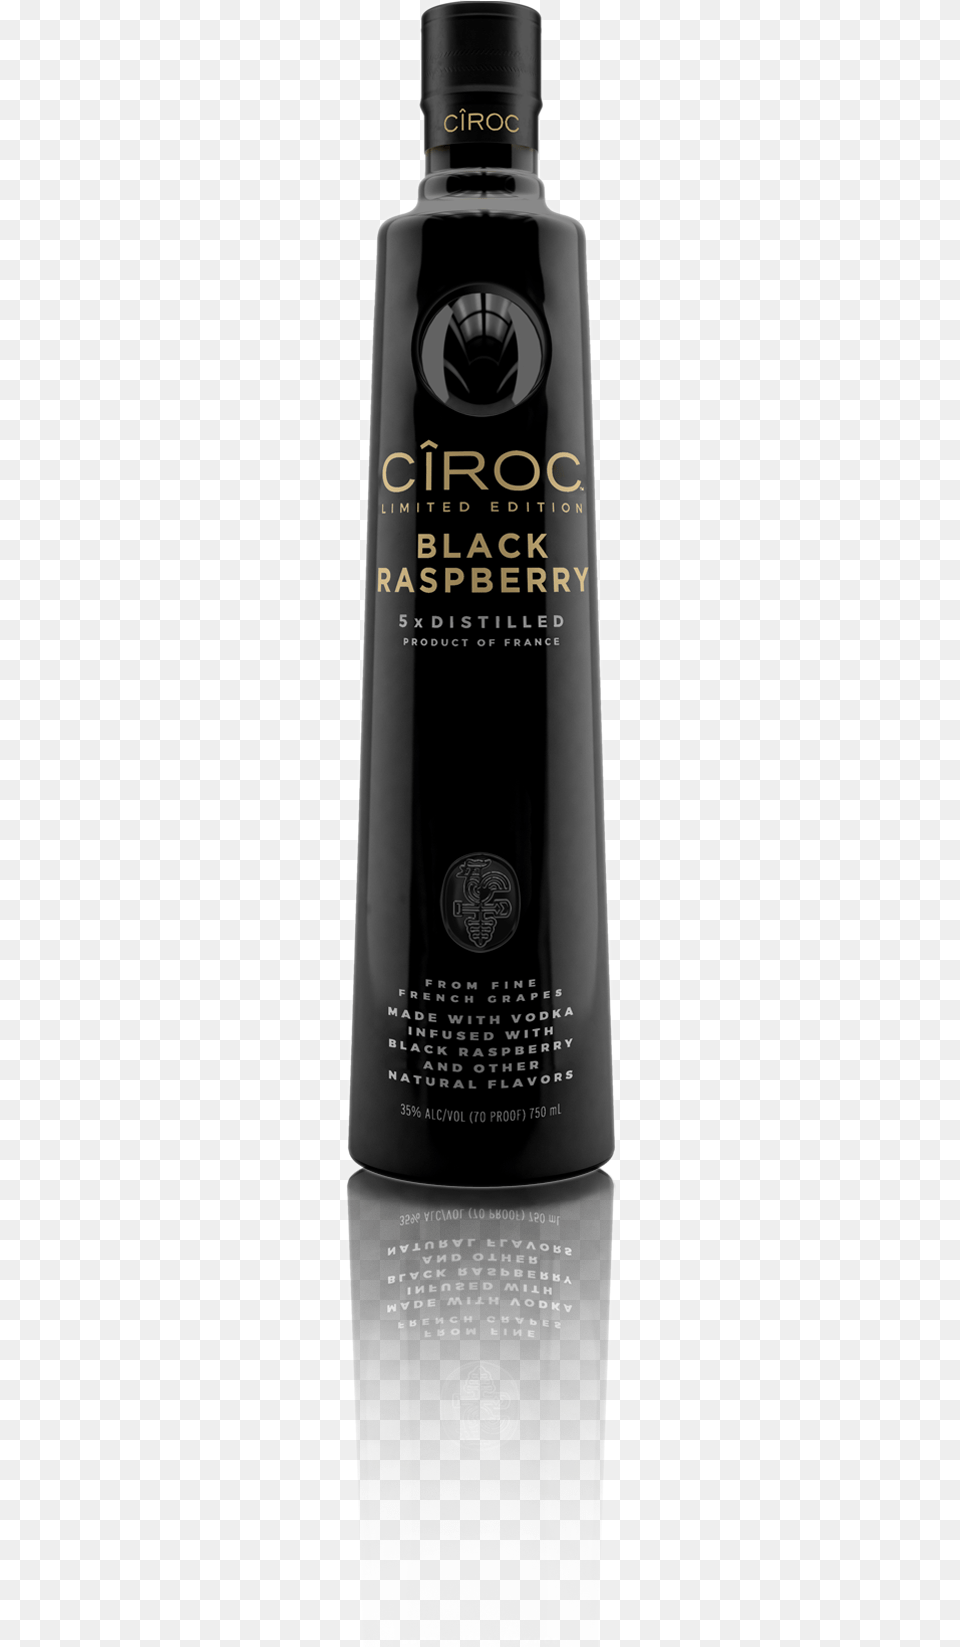 Ciroc Black Raspberry Canada, Alcohol, Beverage, Liquor, Bottle Png Image